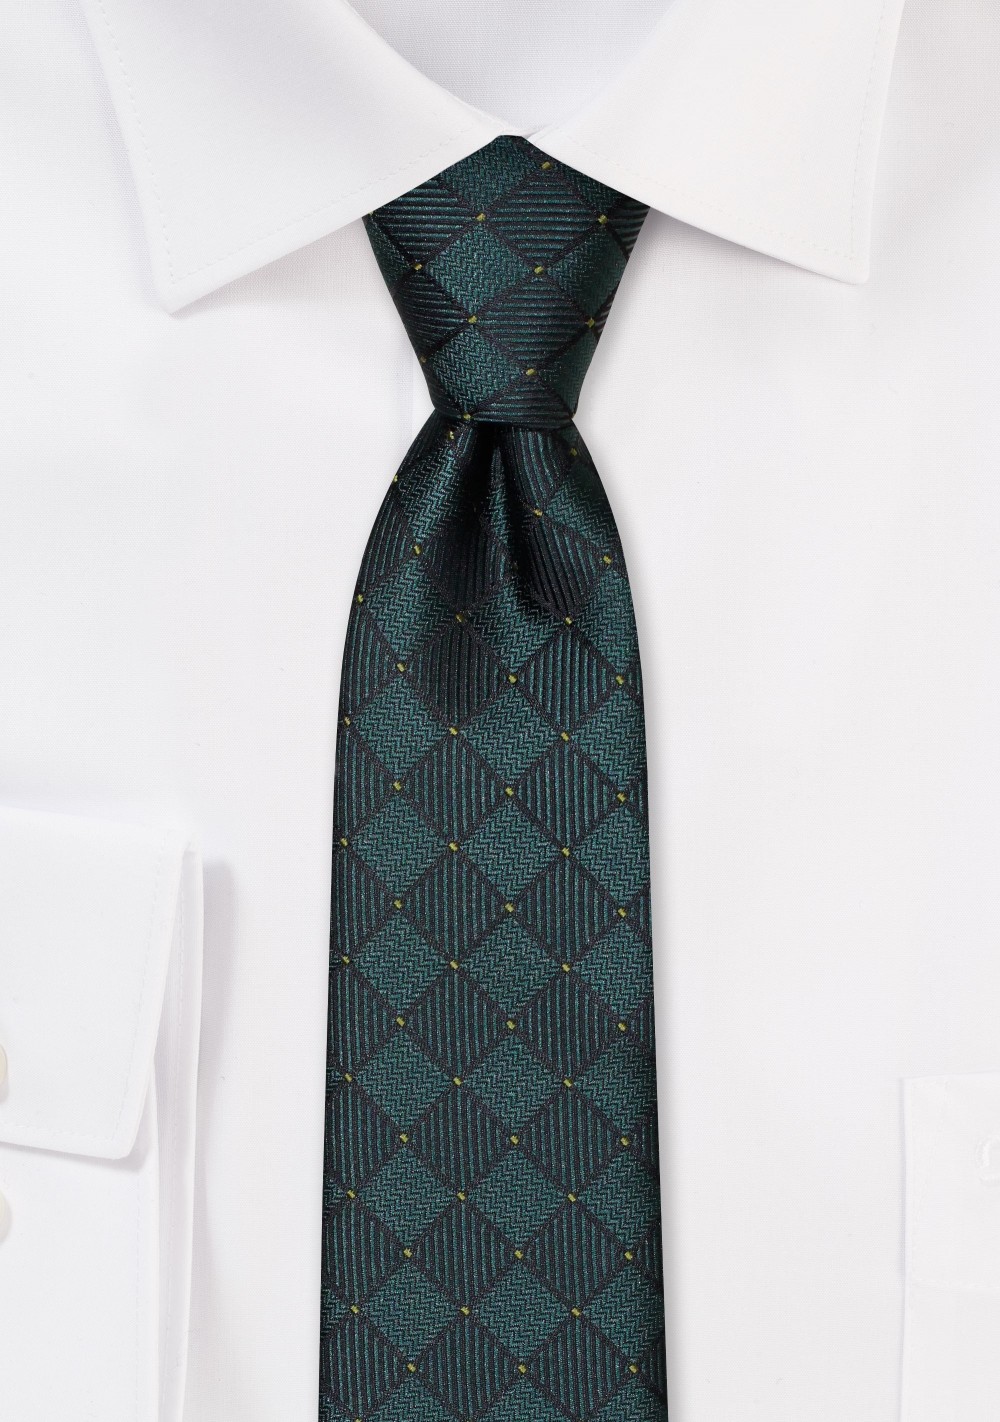 Dark Green Skinny Tie with Checks